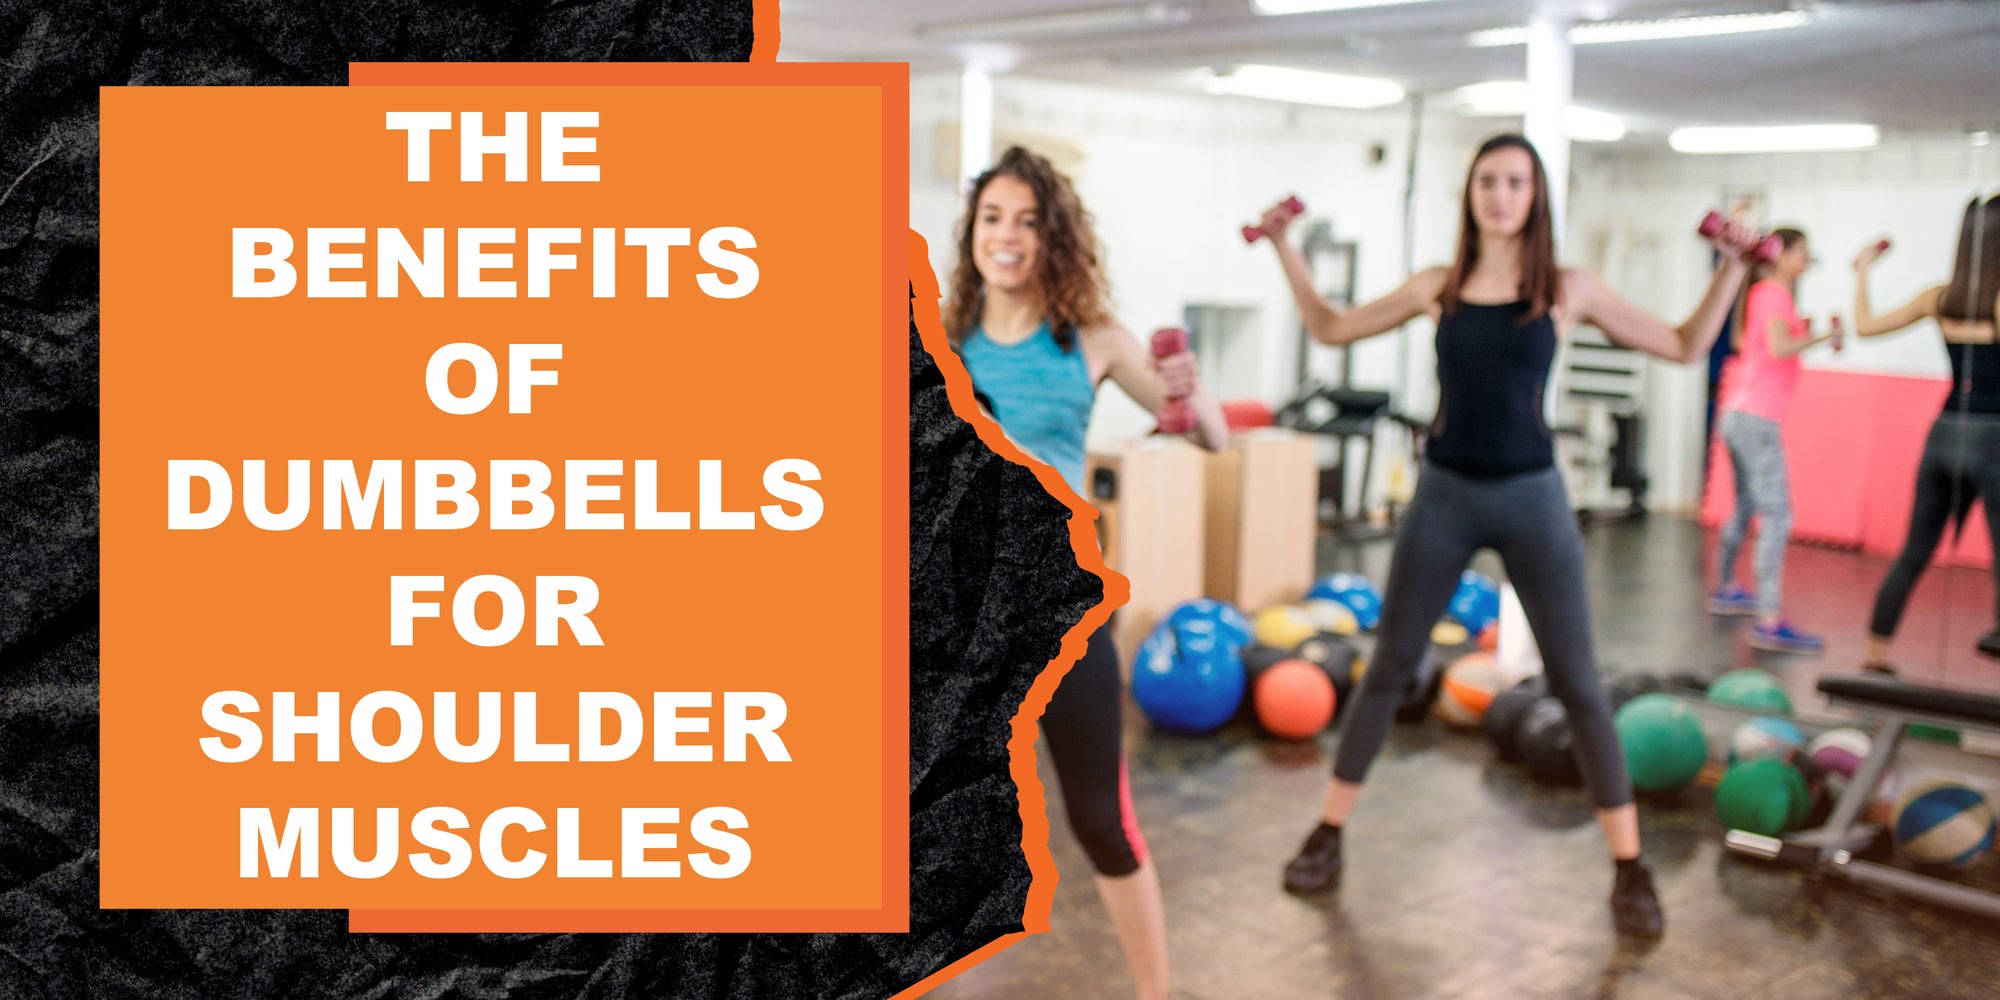 The Benefits of Dumbbells for Shoulder Muscles